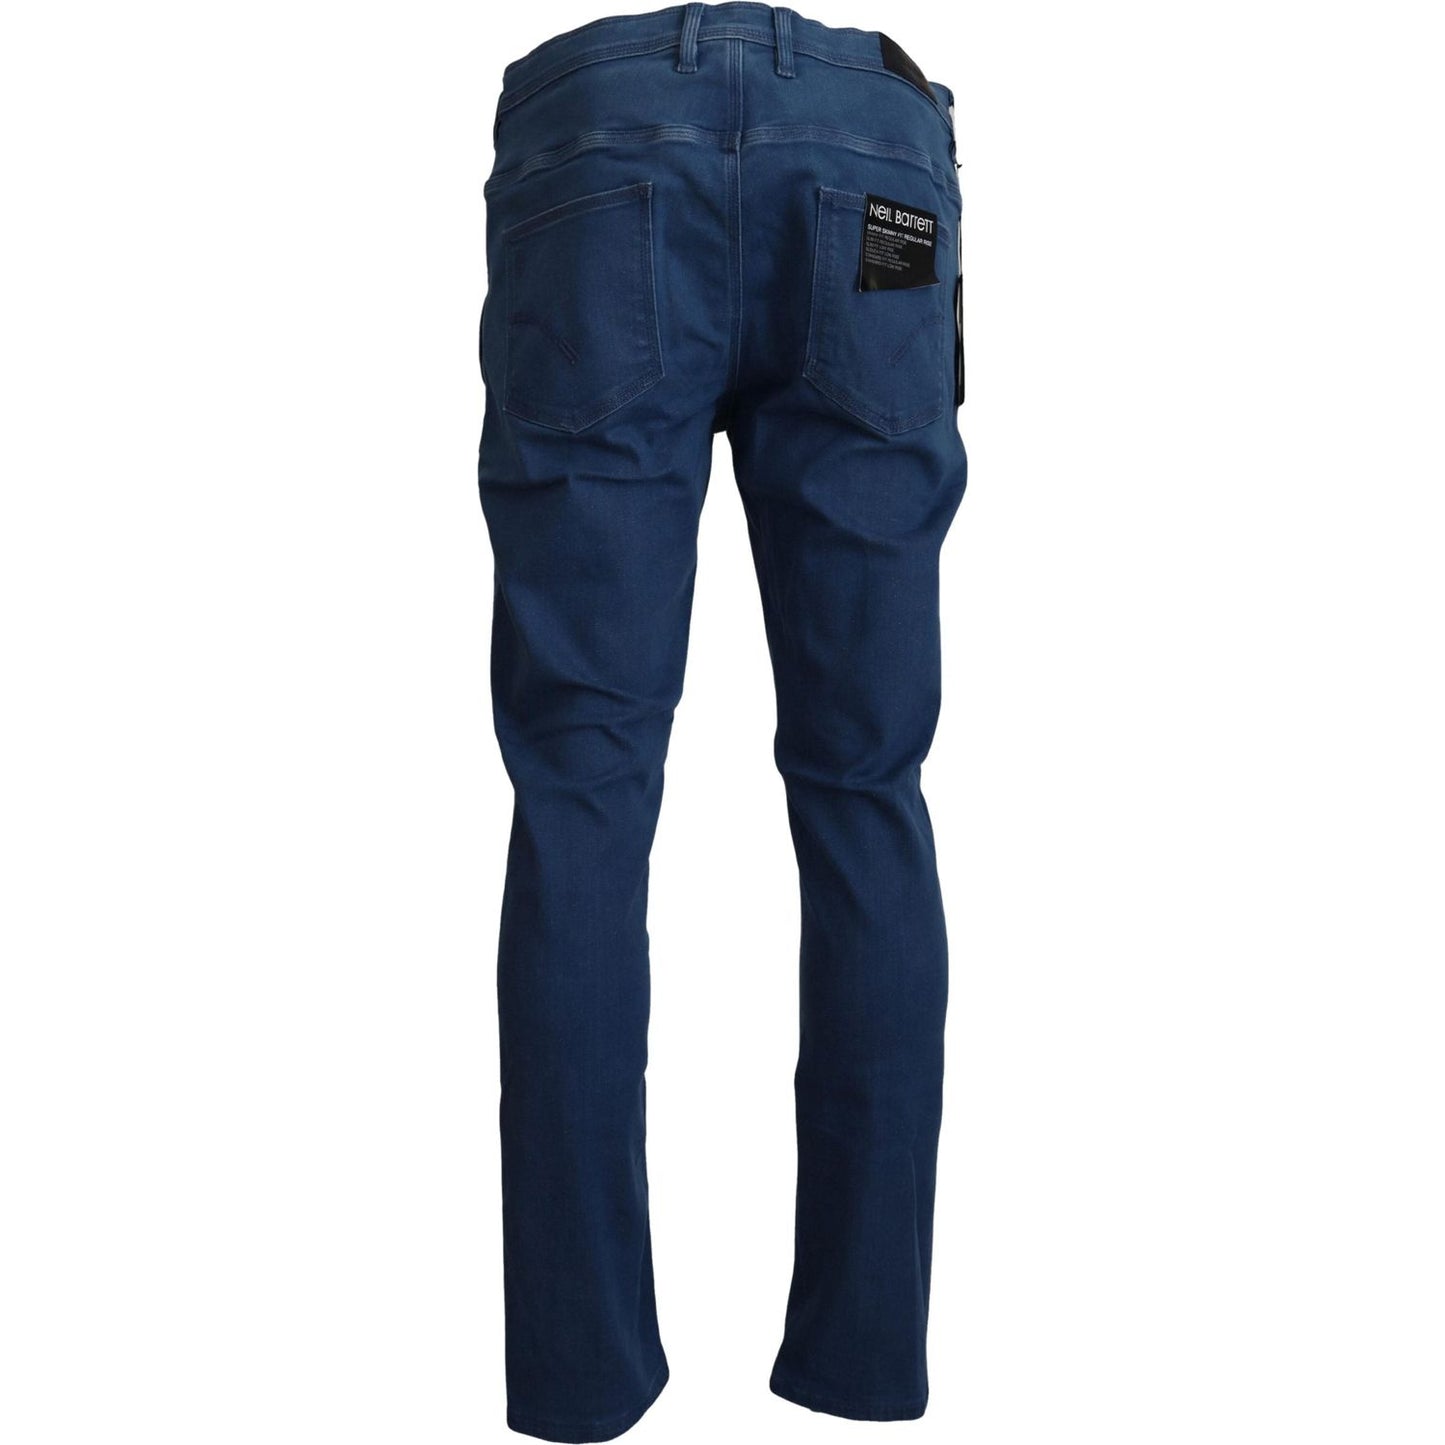 Neil Barrett Chic Skinny Blue Pants for a Sharp Look blue-cotton-stretch-men-casual-denim-jeans